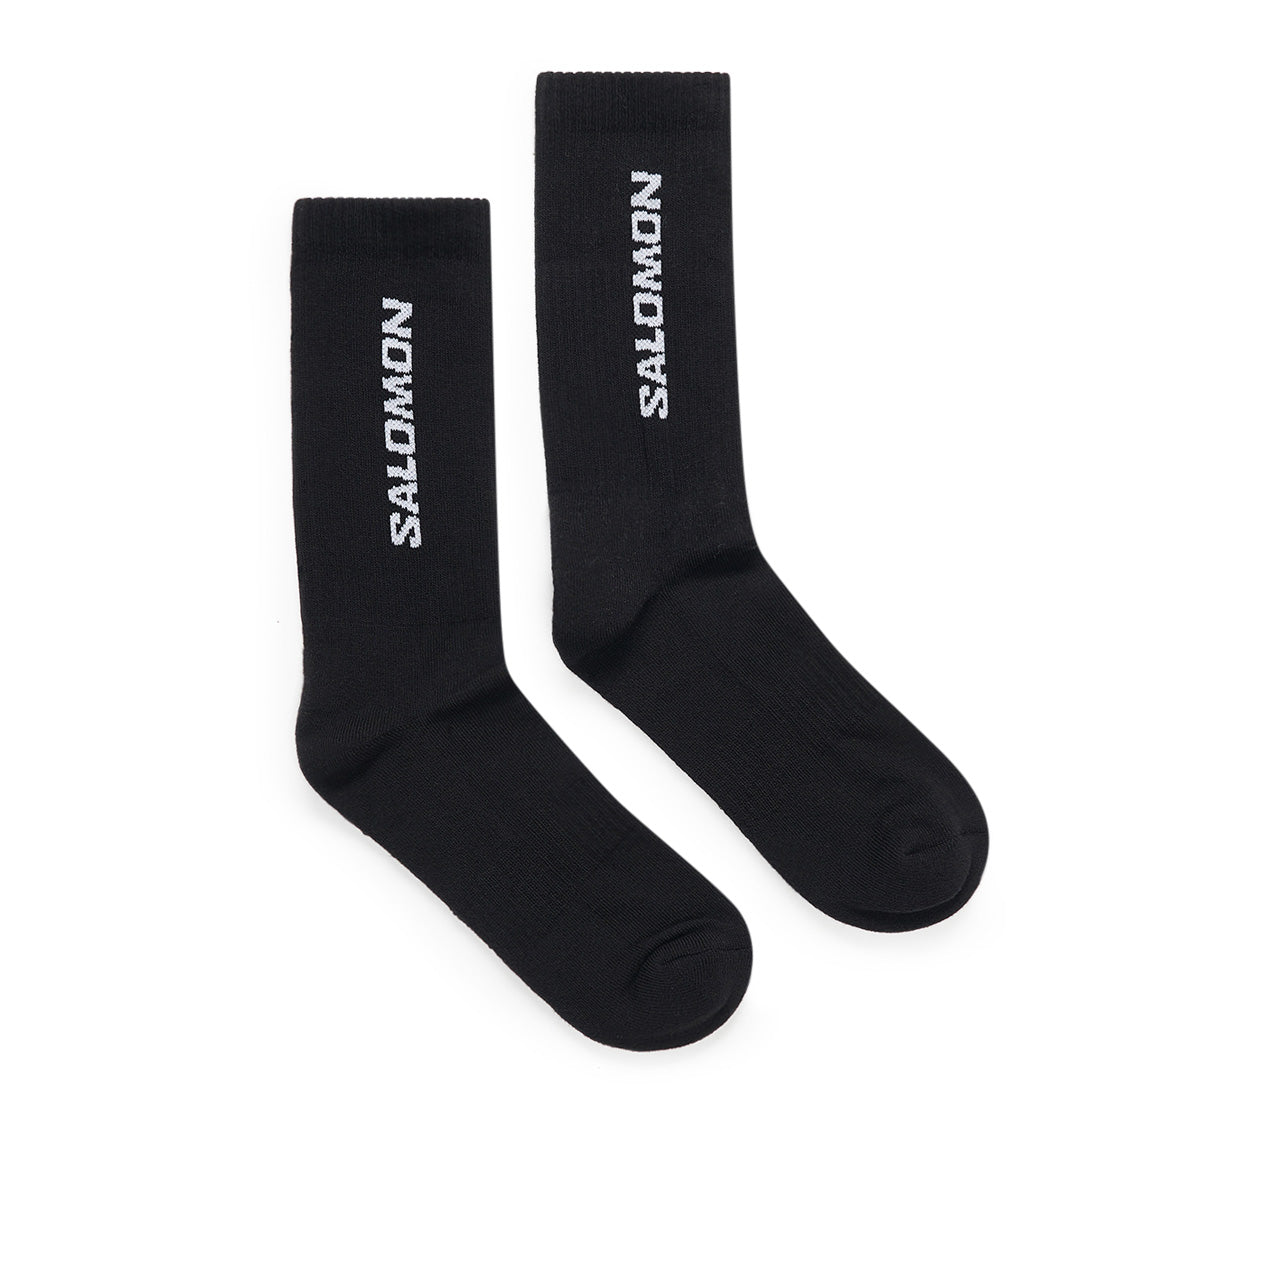 salomon socks everyday crew - 3-pack store LC2086100 (black) a.plus